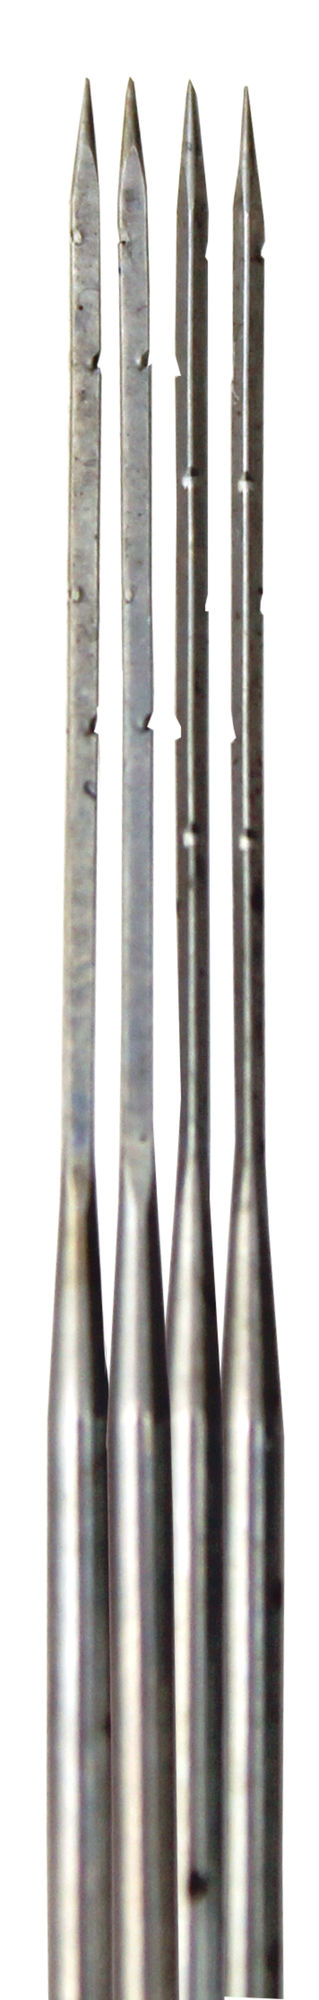 Felting Needles, 40 gauge, triangular (4-pack)